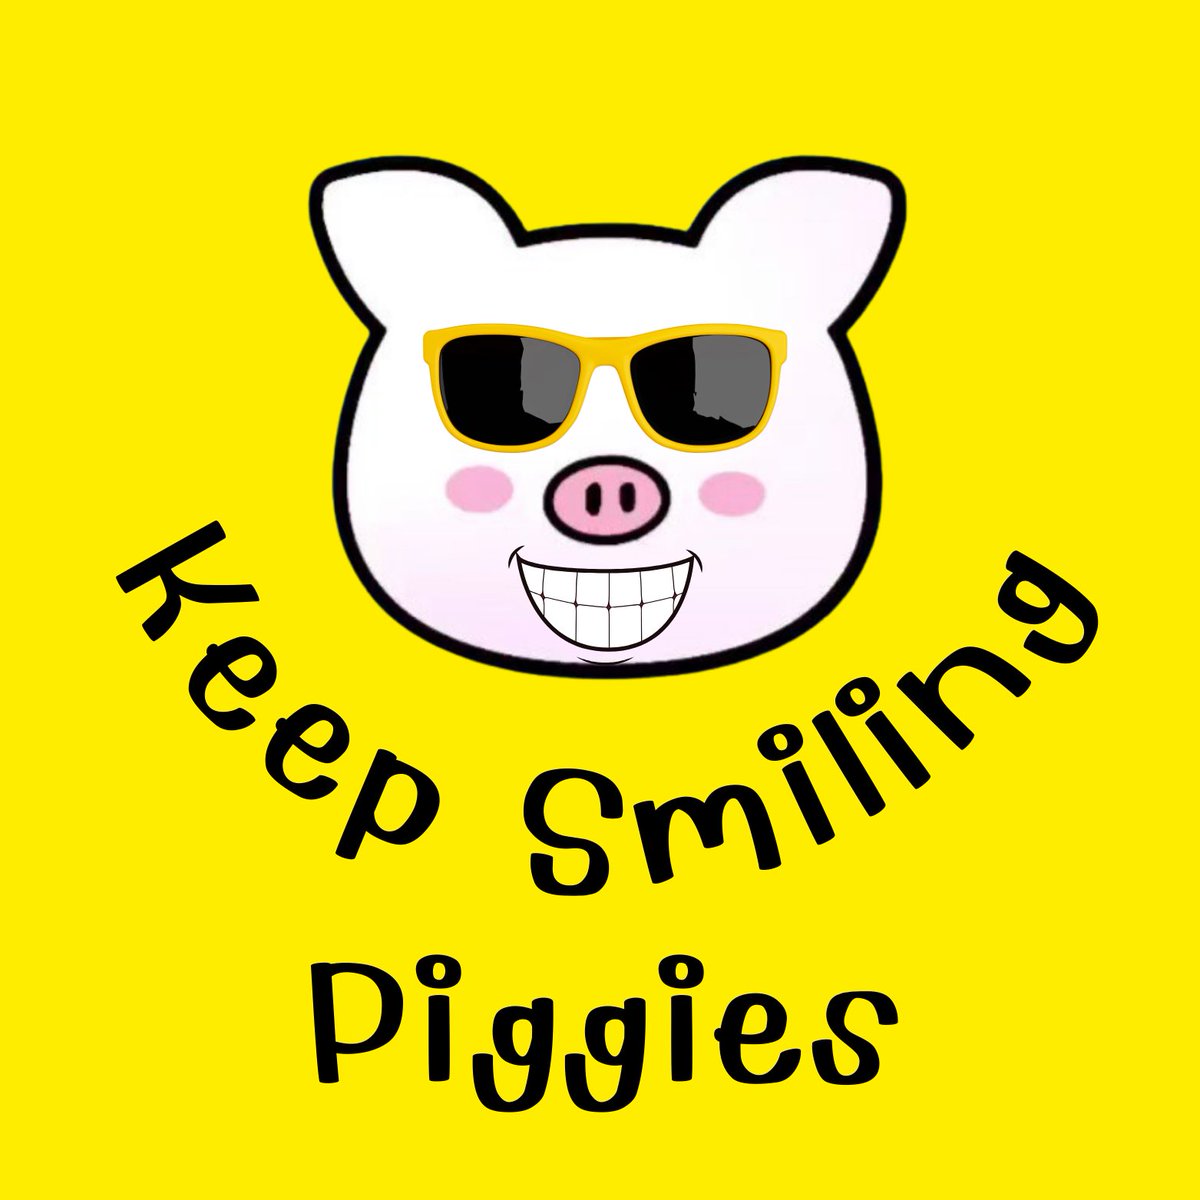 @rla323 $PiggyC @piggycoinbsc #PiggyCoin

#WeDoThingsDifferently
❤️🐷